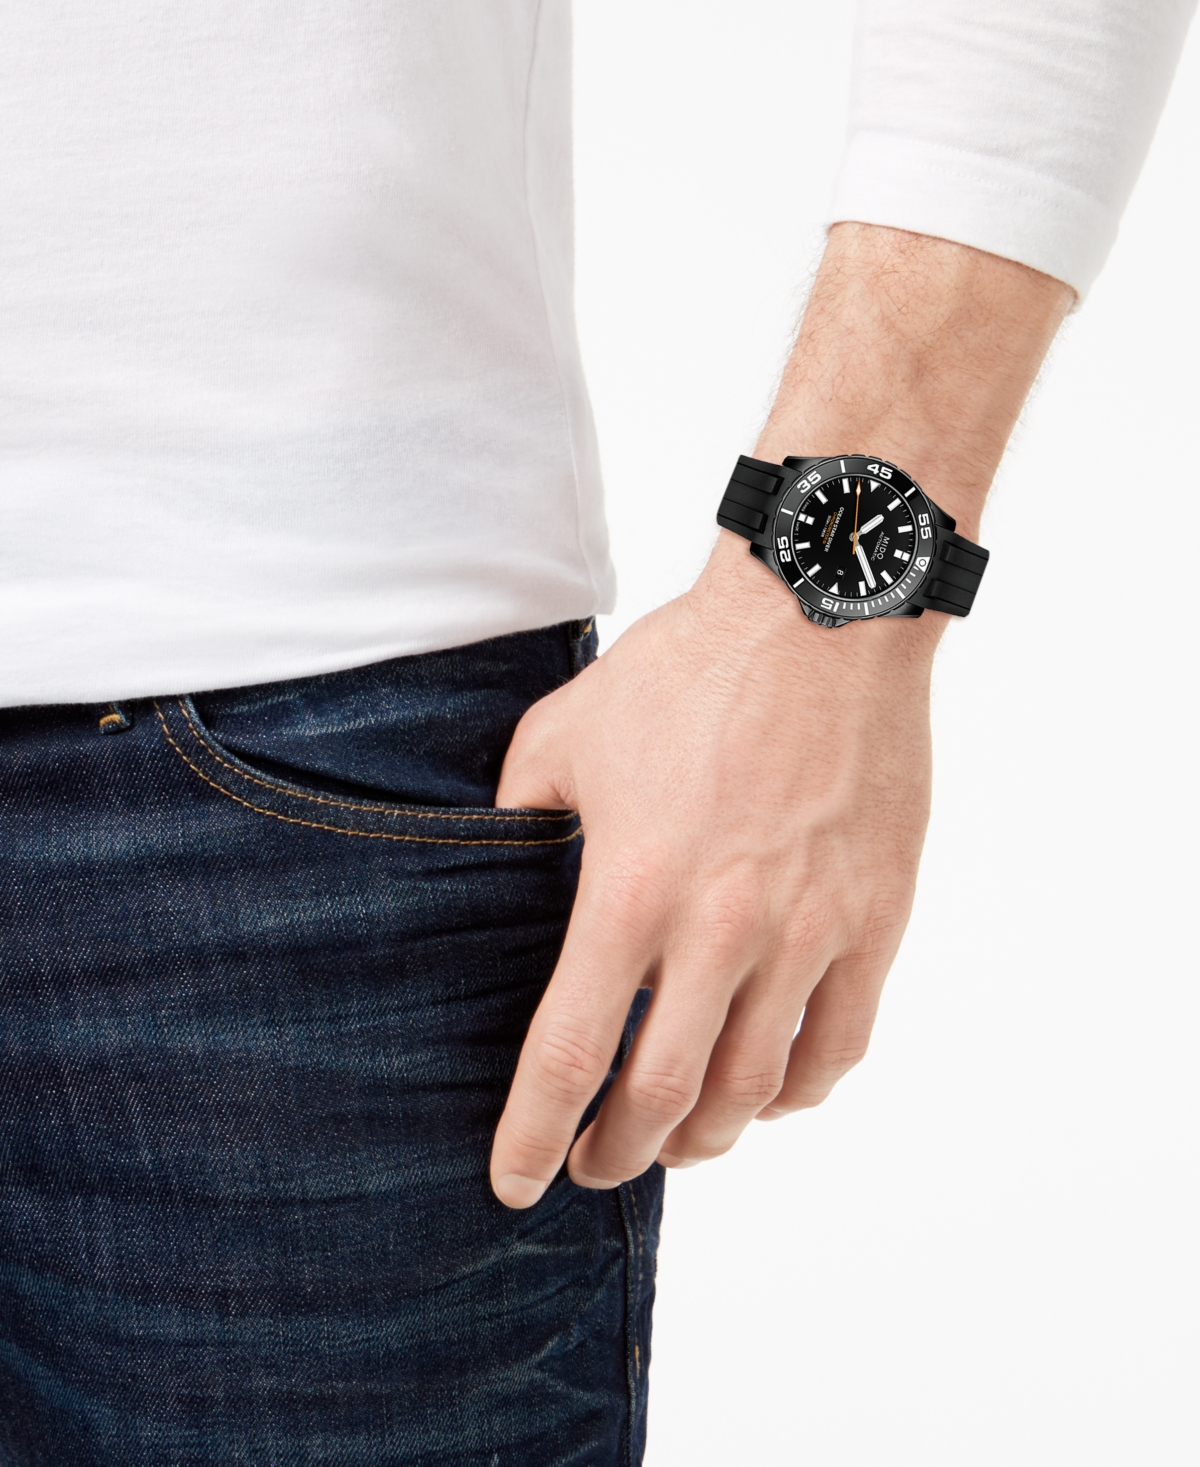 Shop Mido Men's Swiss Automatic Chronometer Ocean Star Diver 600 Black Rubber Strap Watch 43.5mm